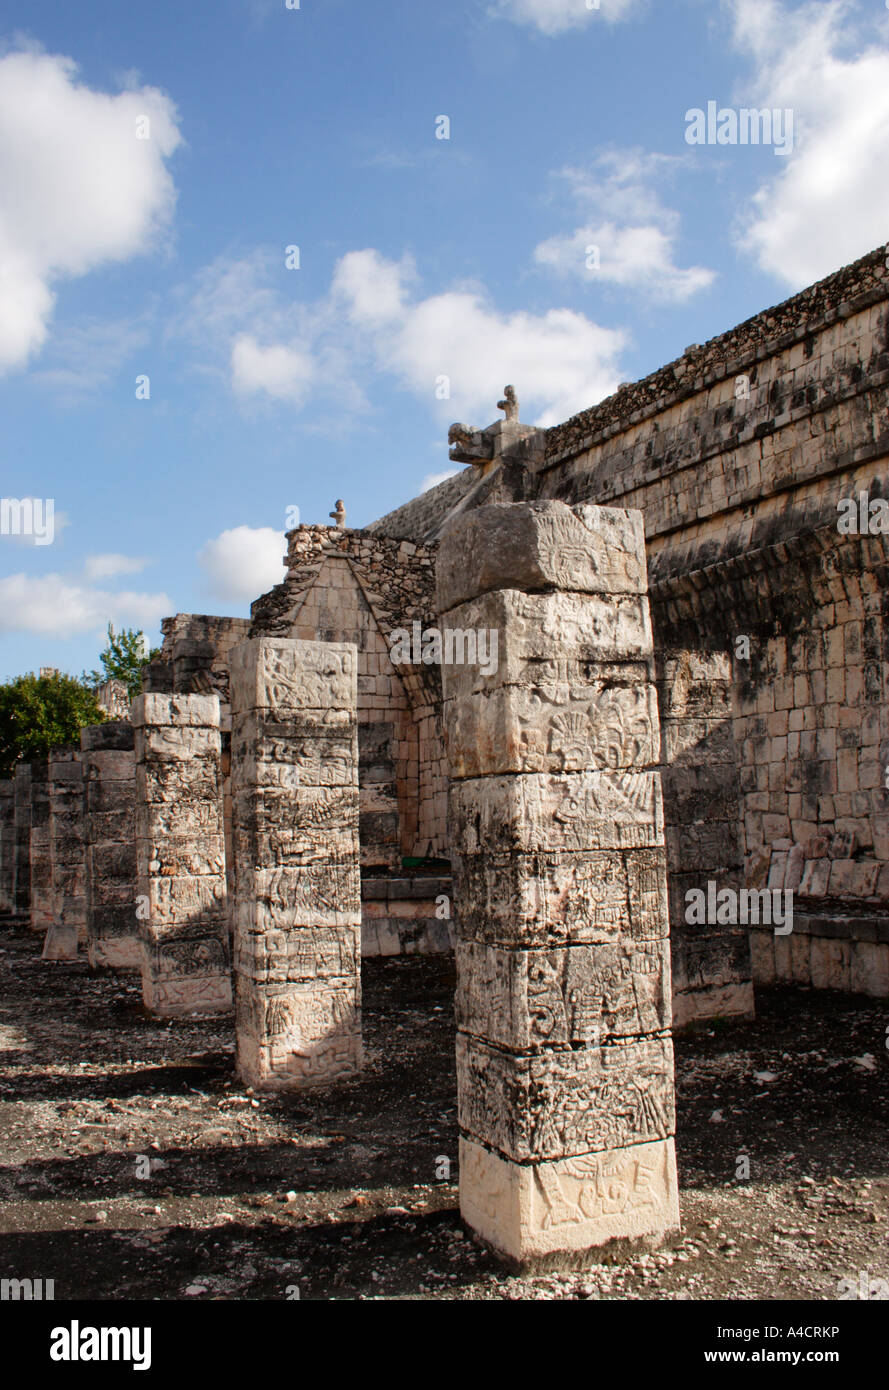 Chichen Itza, Mayan ruin site in Yucatan shows Central Mexico Toltec influence at Temple of the Warrior. Stock Photo